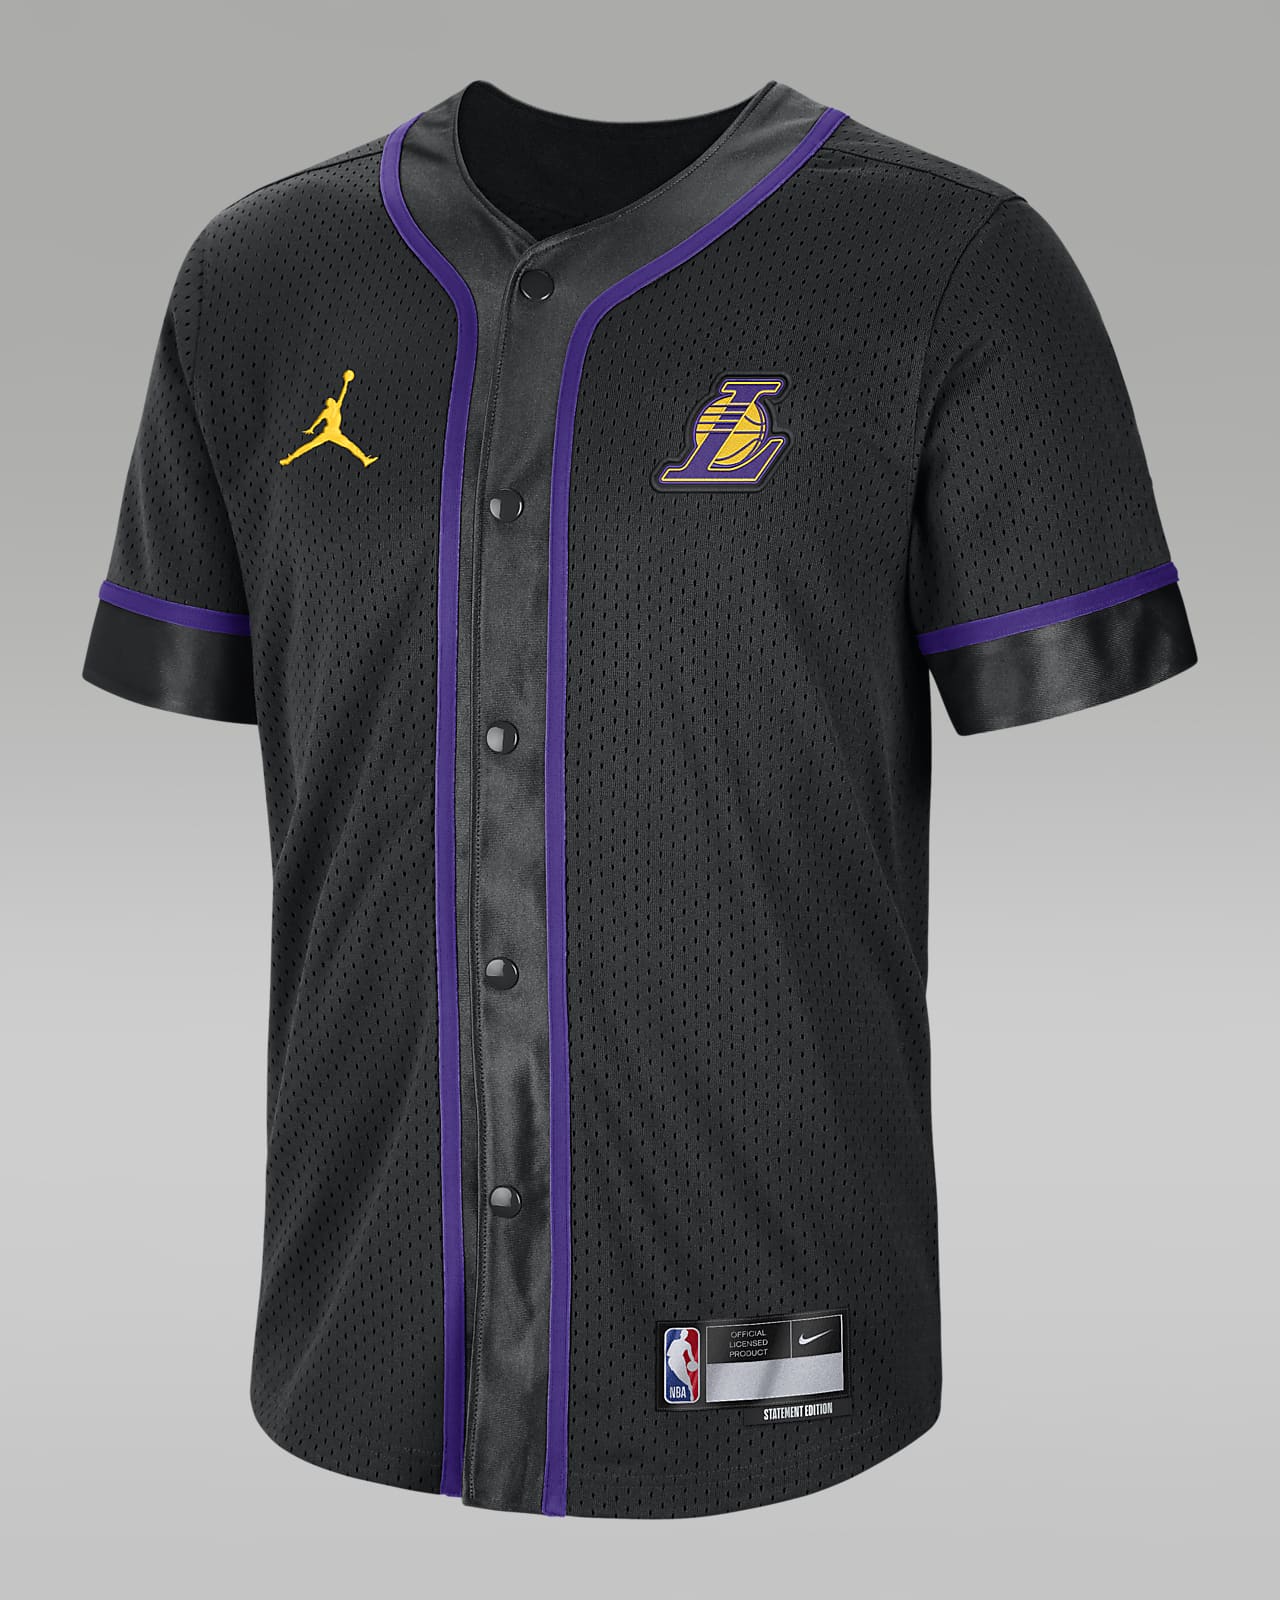 Los Angeles Lakers Essential Camiseta de manga larga Nike NBA - Mujer. Nike  ES